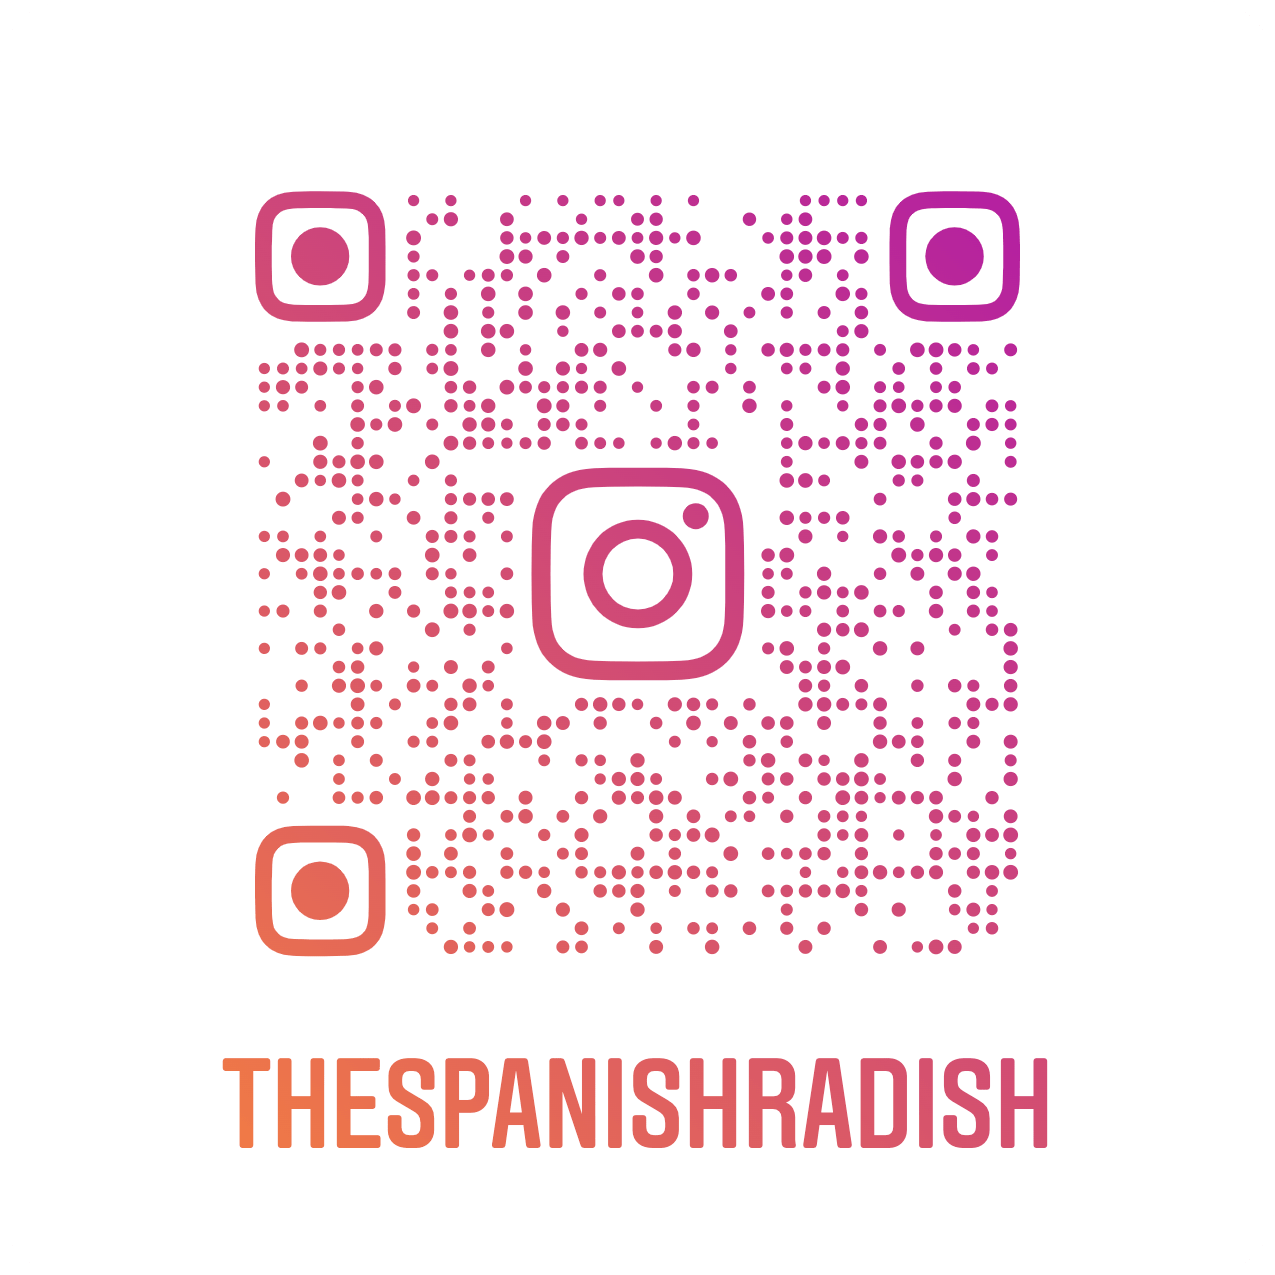 Spanish radish nametag for instagram